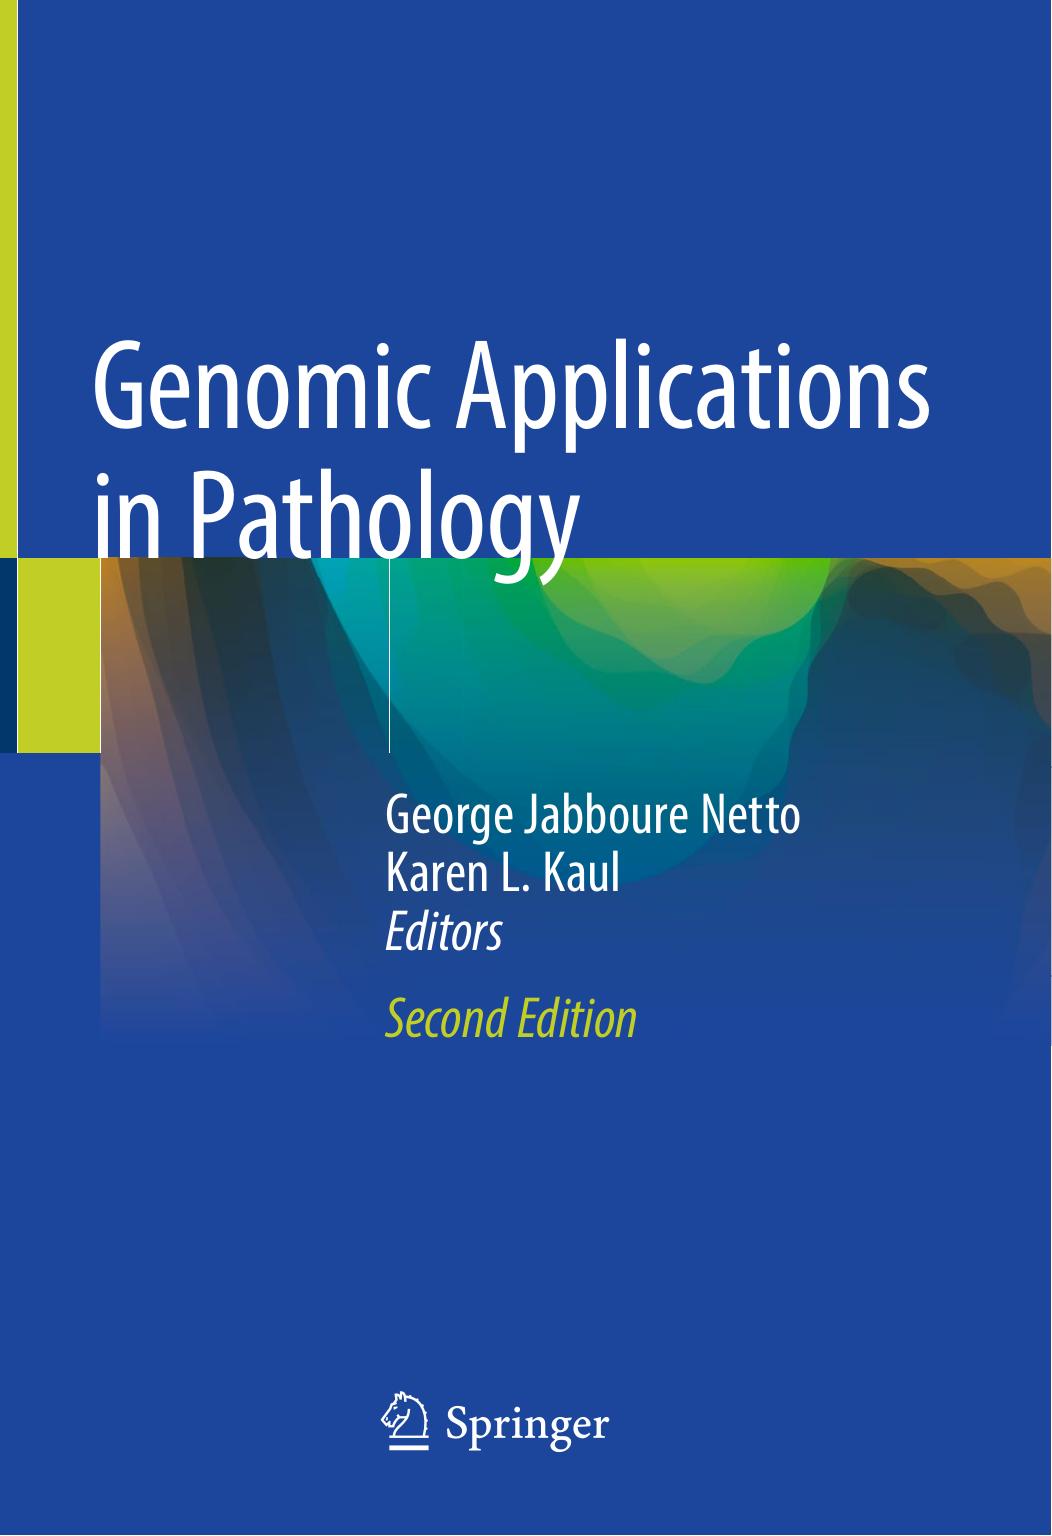 Genomic Applications in Pathology 2nd ed. 2019.pdf